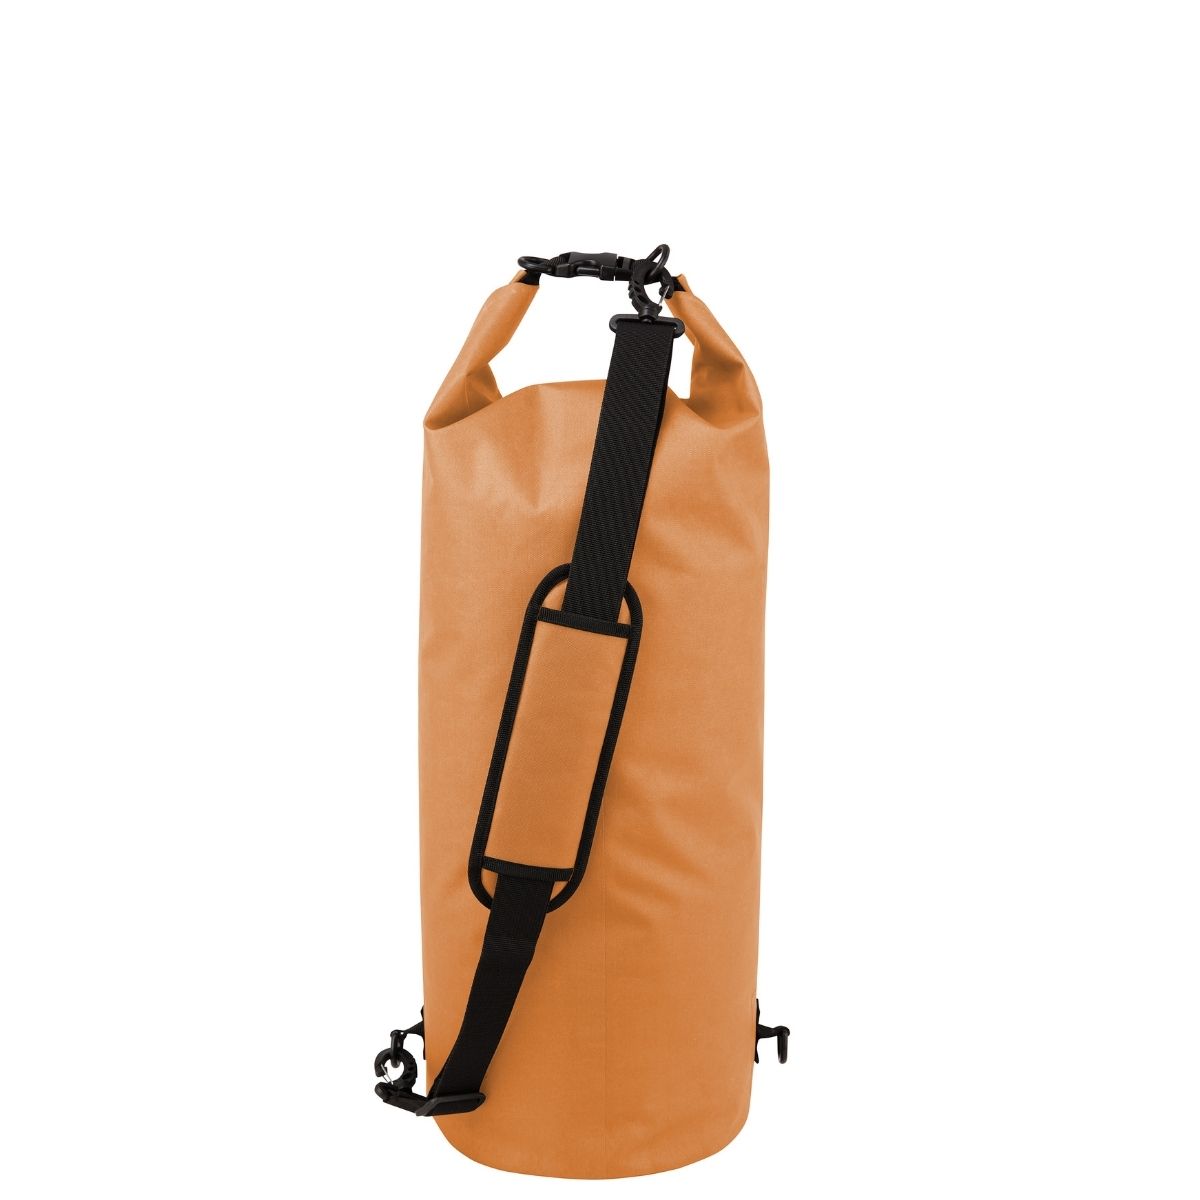 Orange Northcore compression Bag